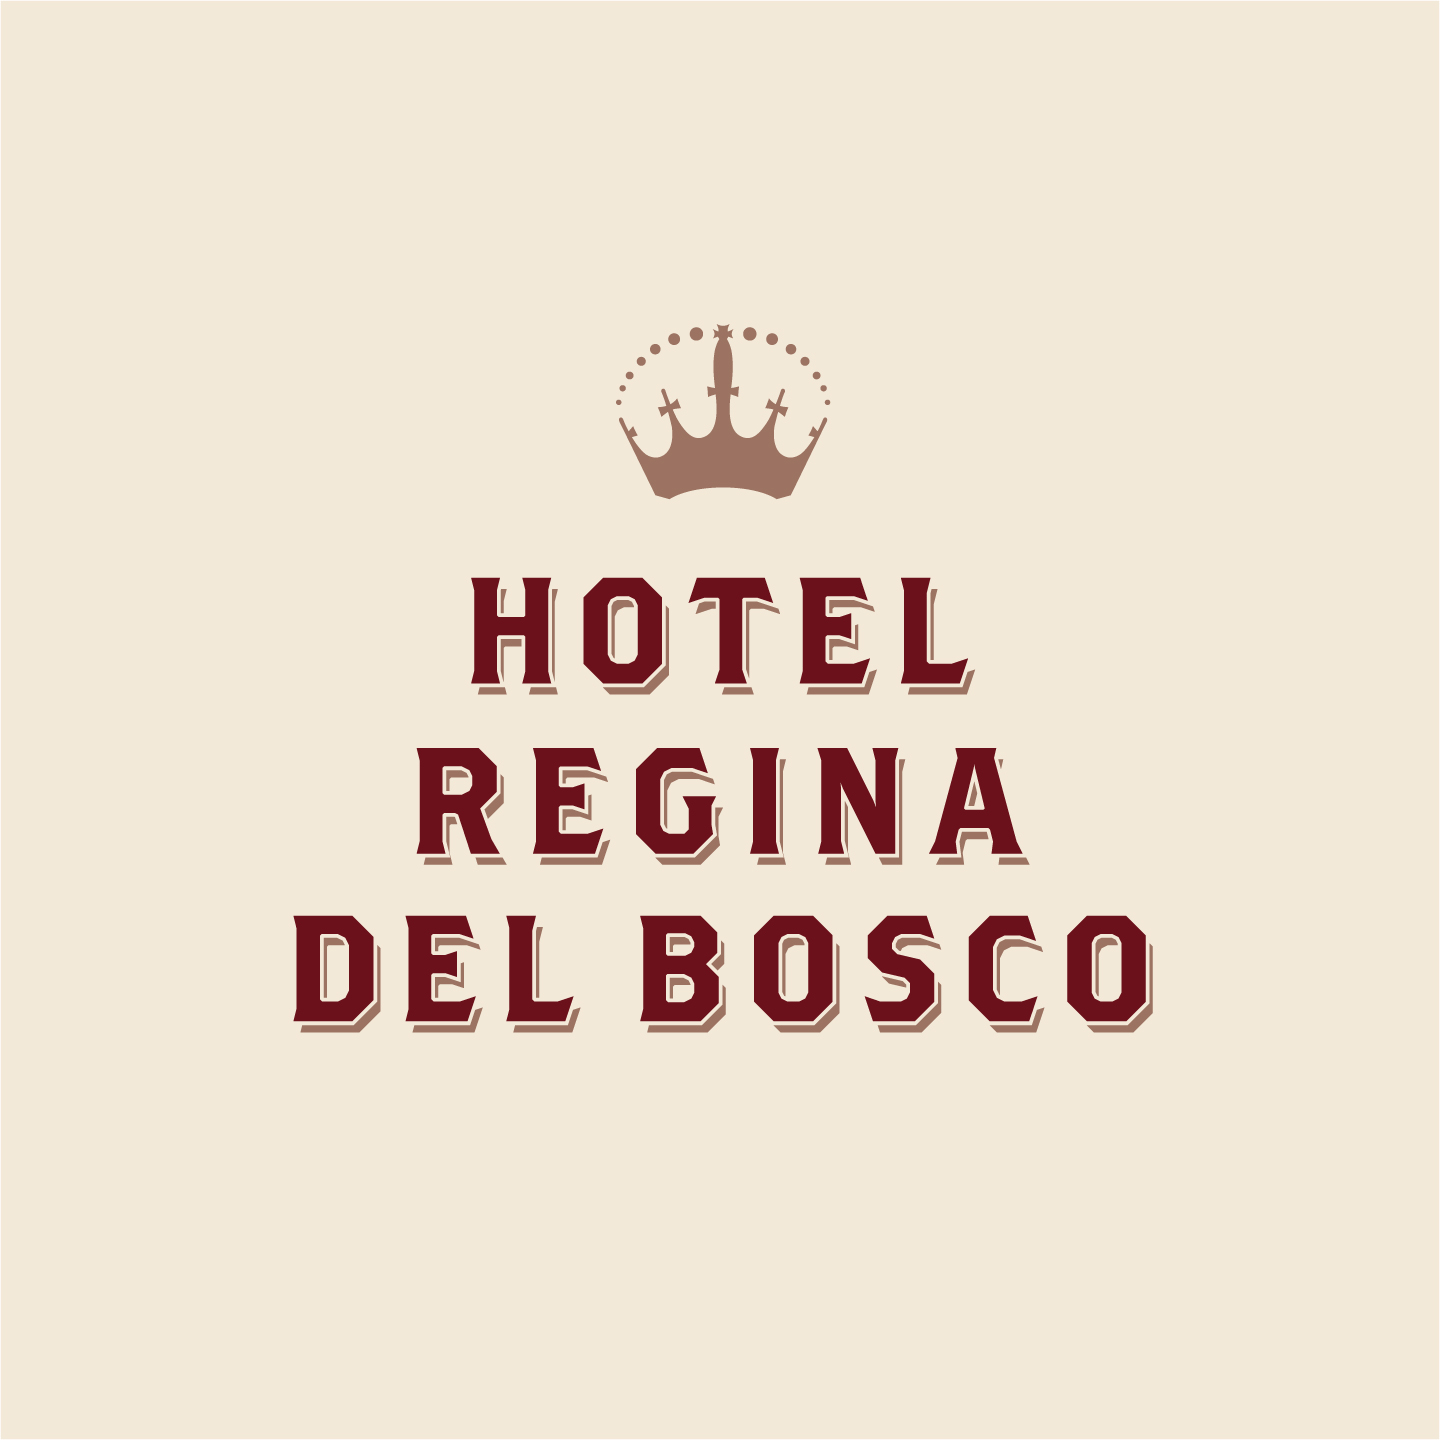 Hotel Regina Del Bosco logo design by Hunter Oden of oden.house